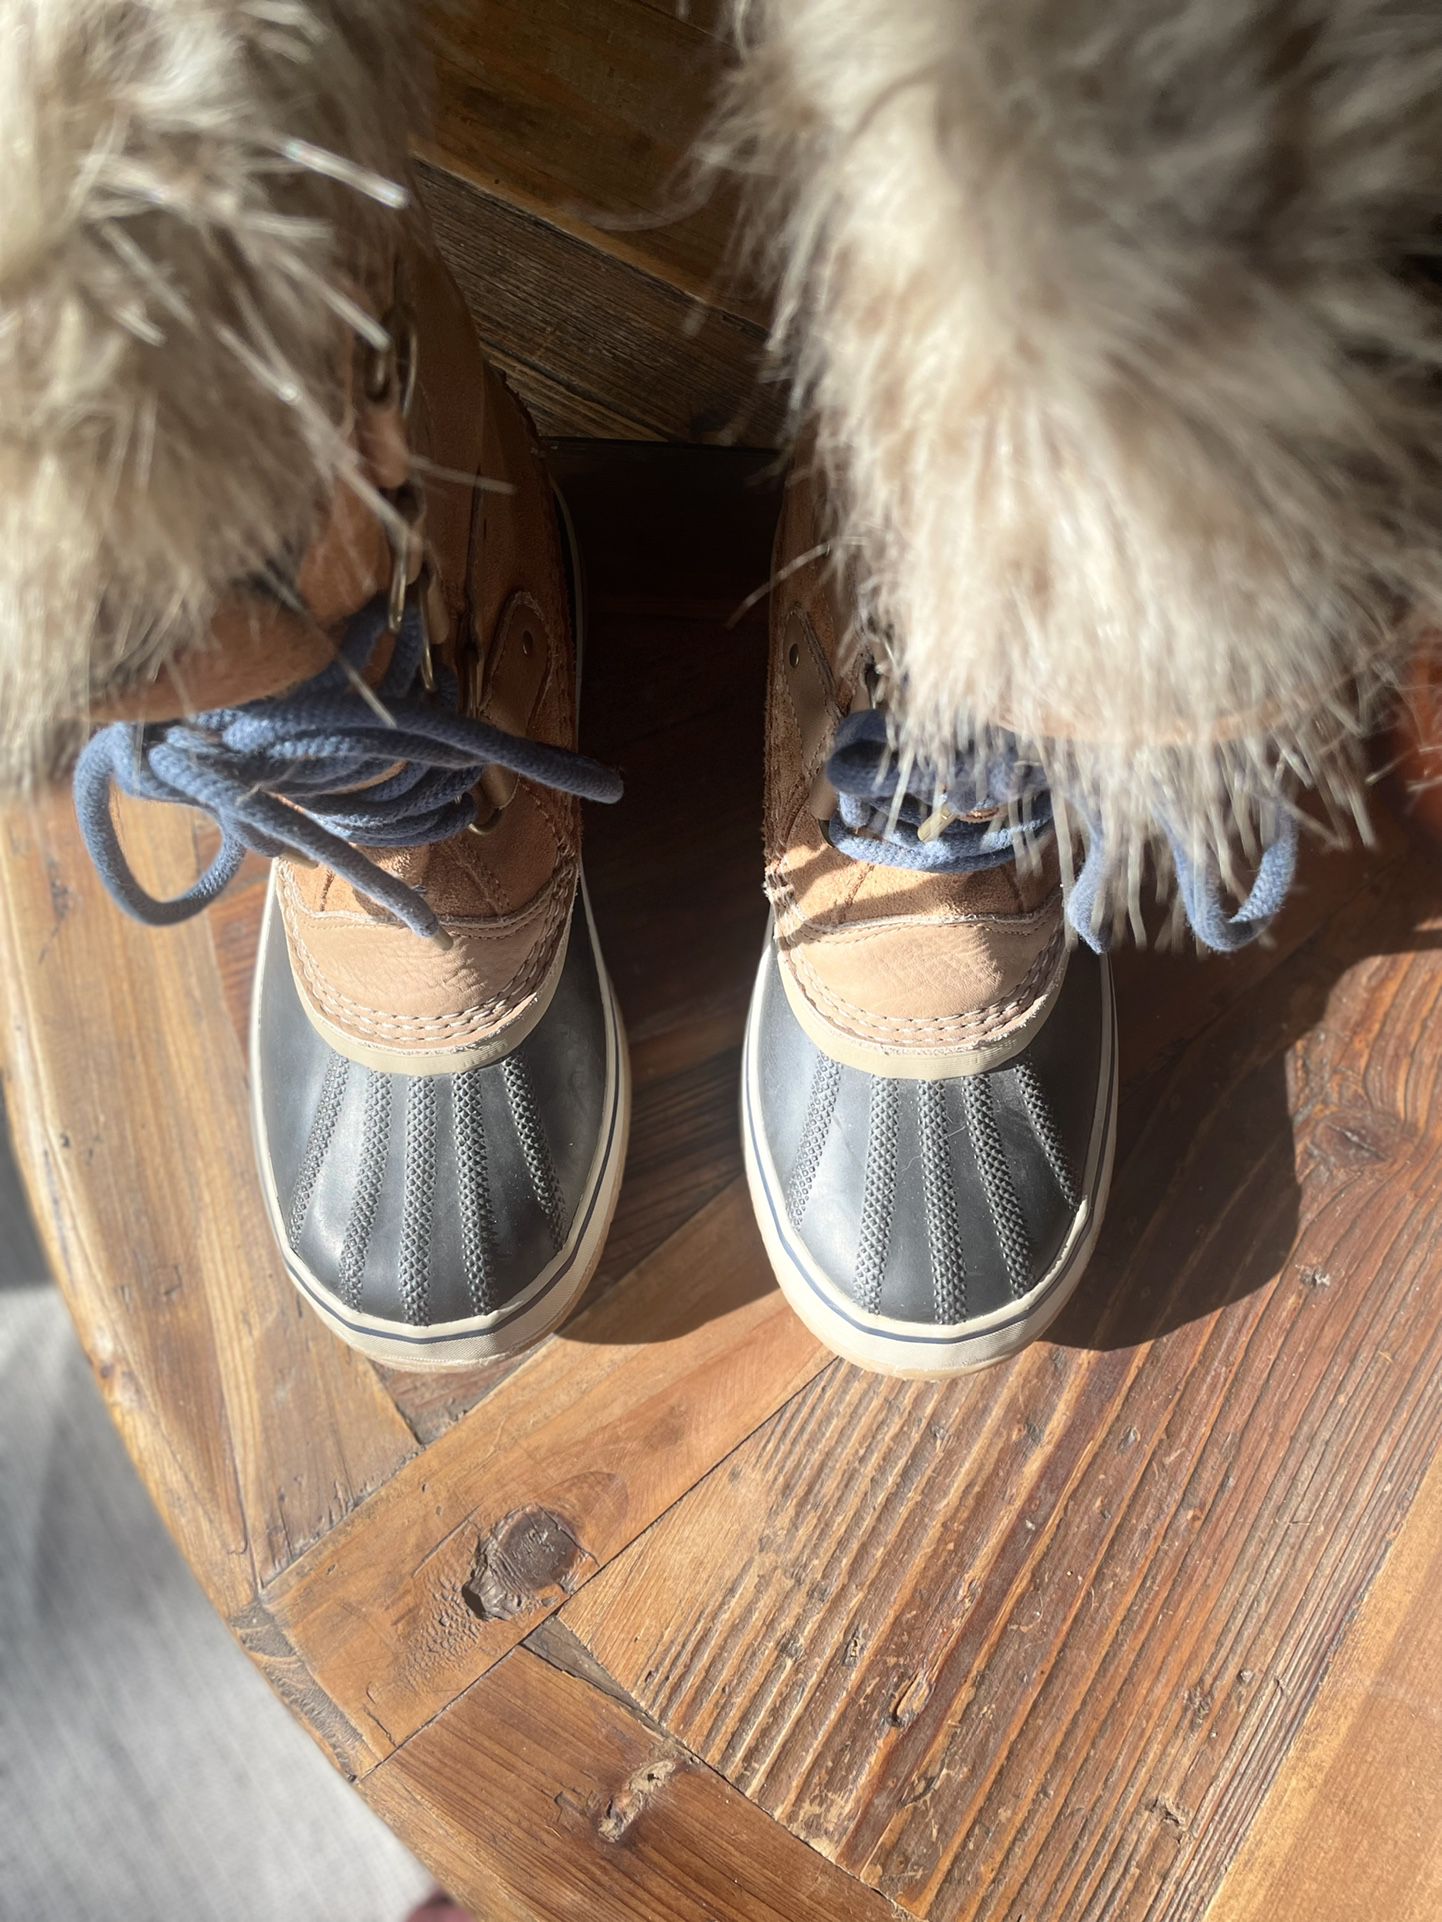 Women's Sorel Snow Boots